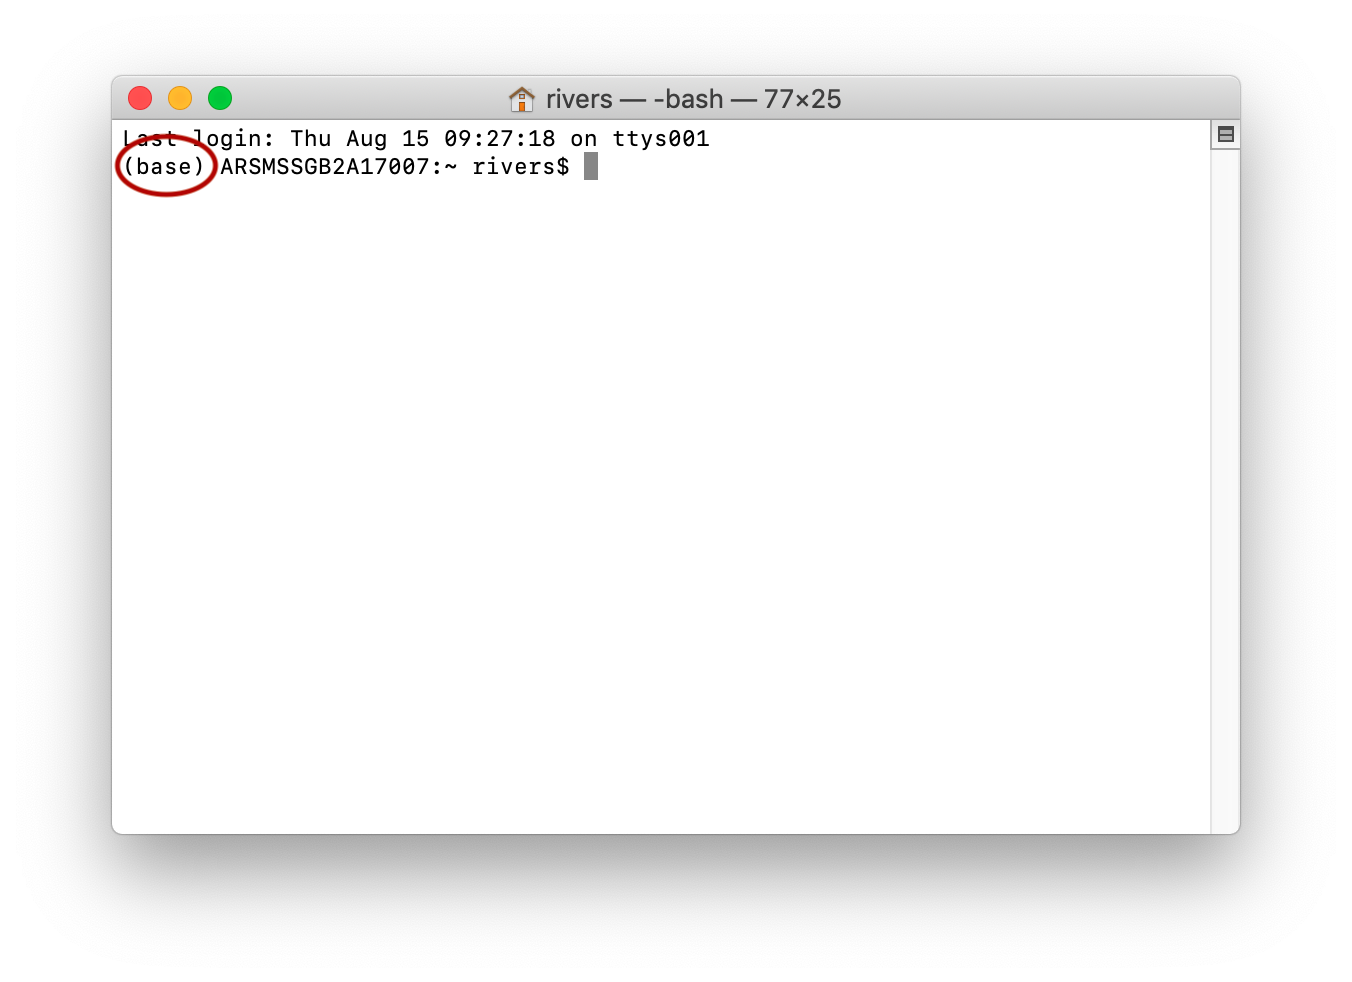 mac osx install python3 for jupyter